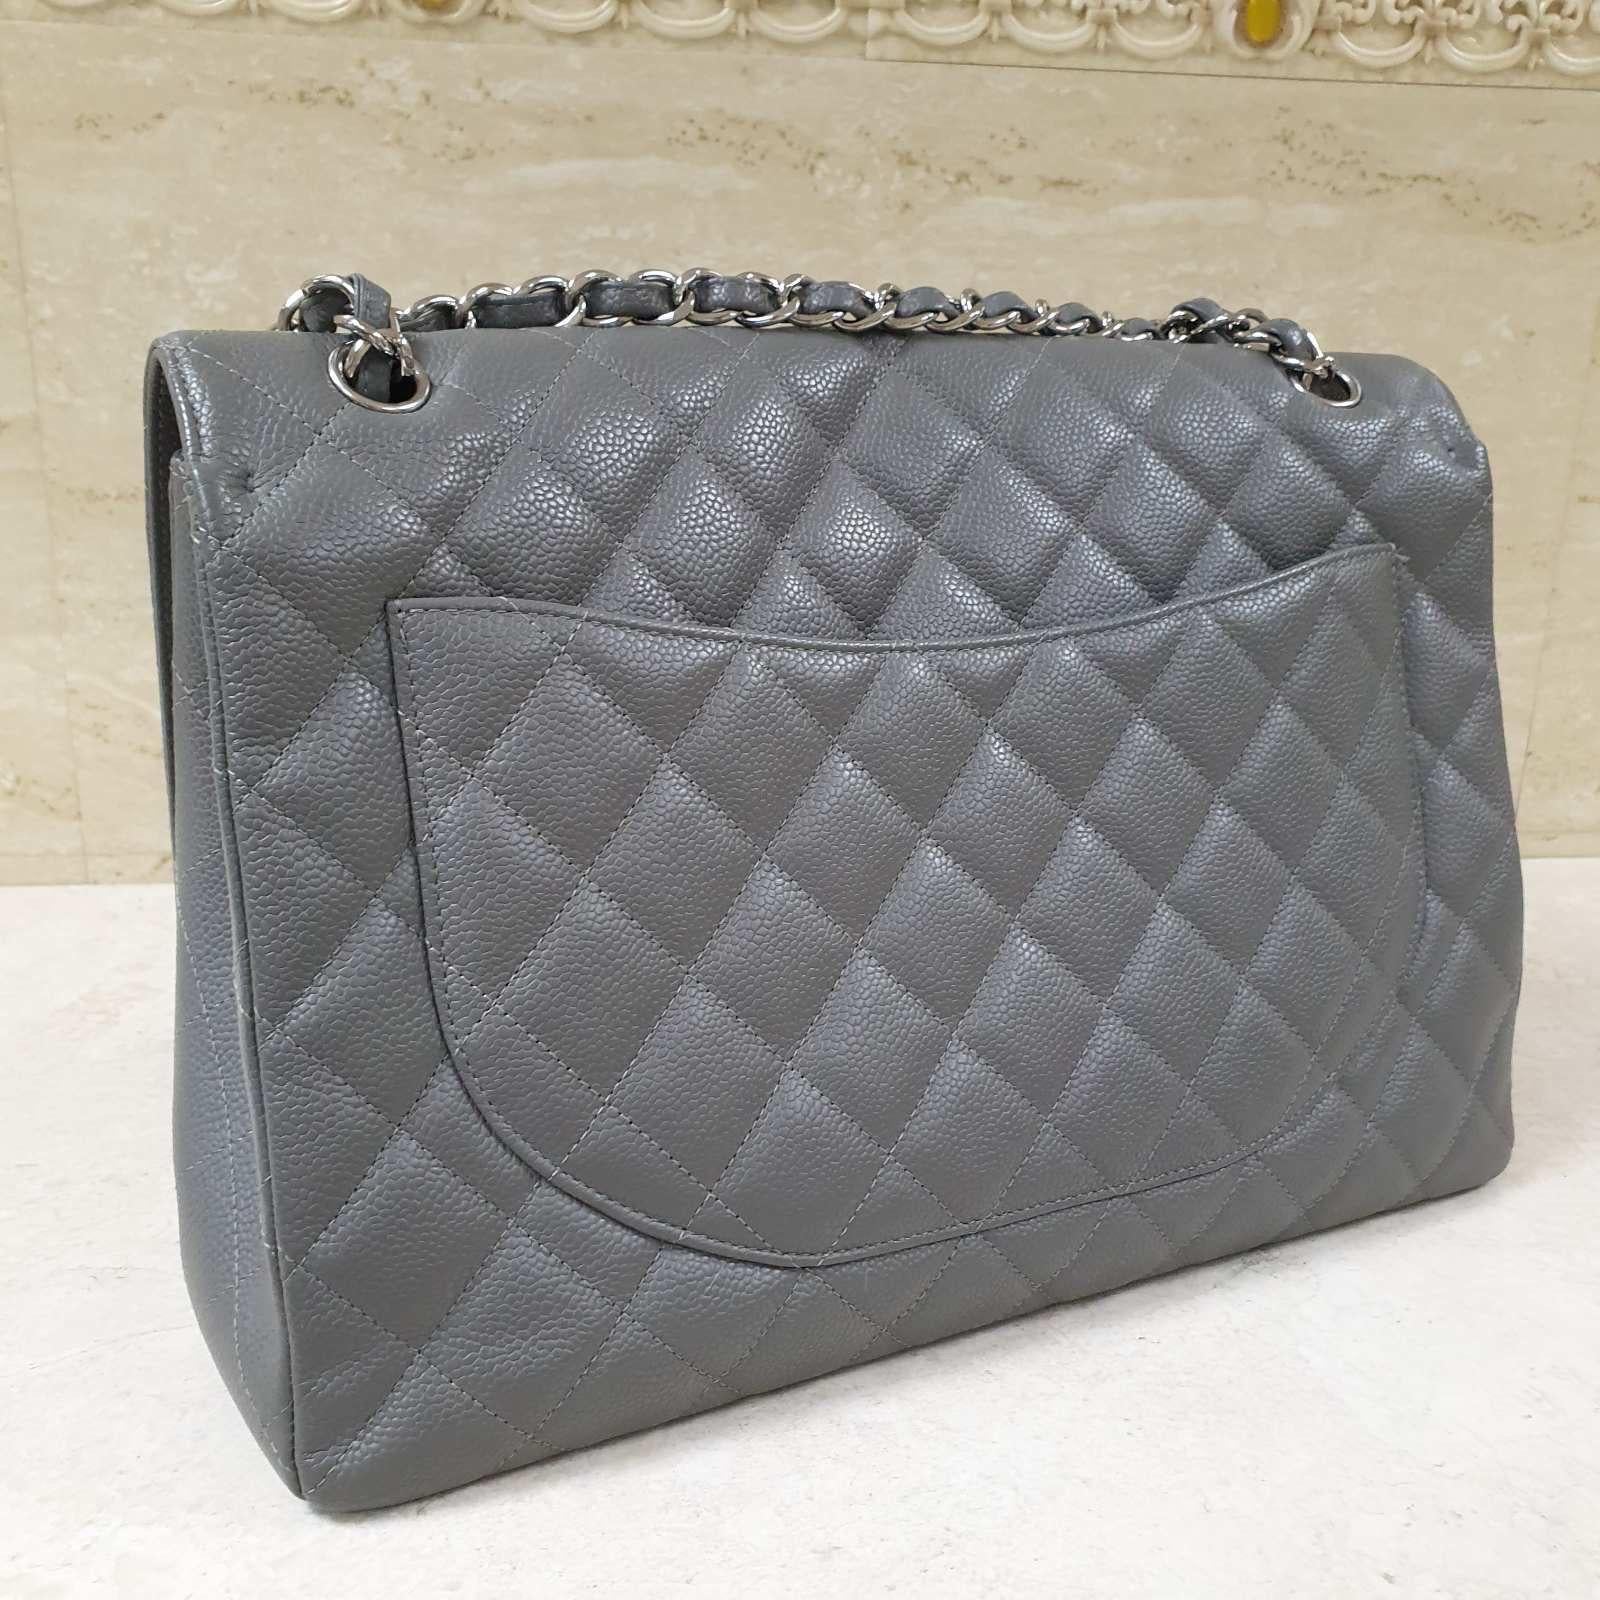 CHANEL Jumbo Gray Caviar Leather Maxi Bag 2